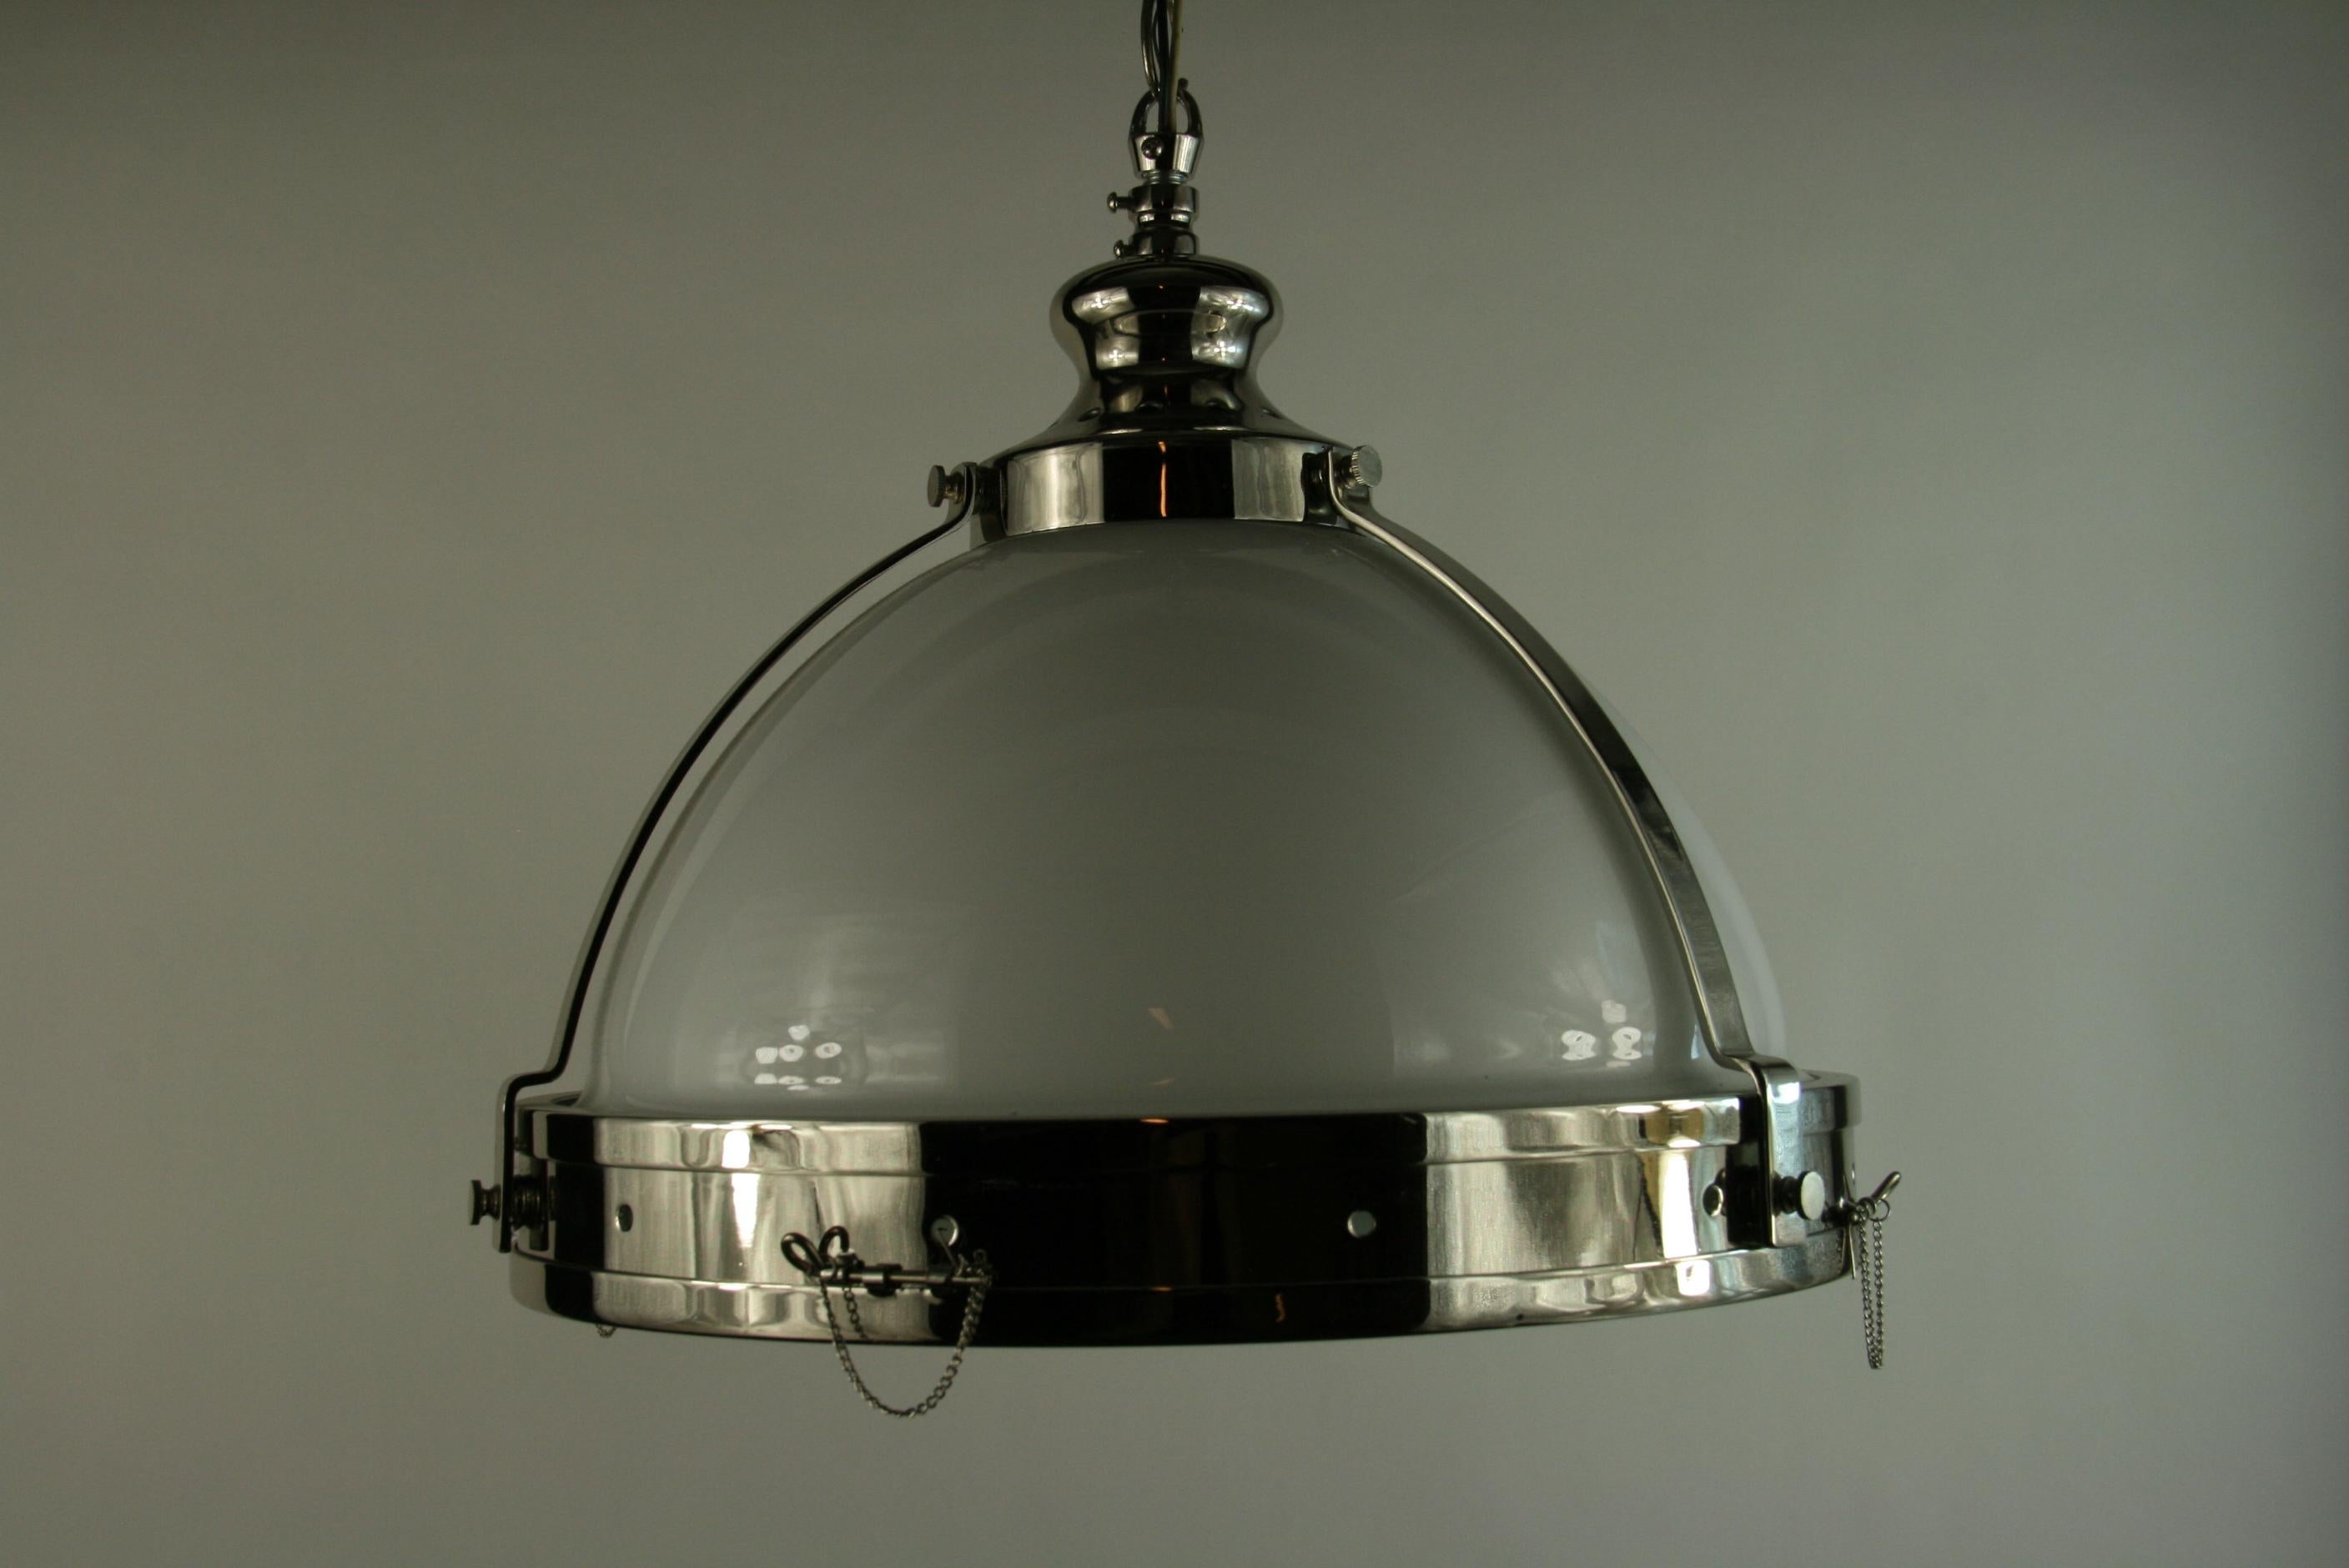 8-210 opaline  and chrome glass pendant
2 internal lights
